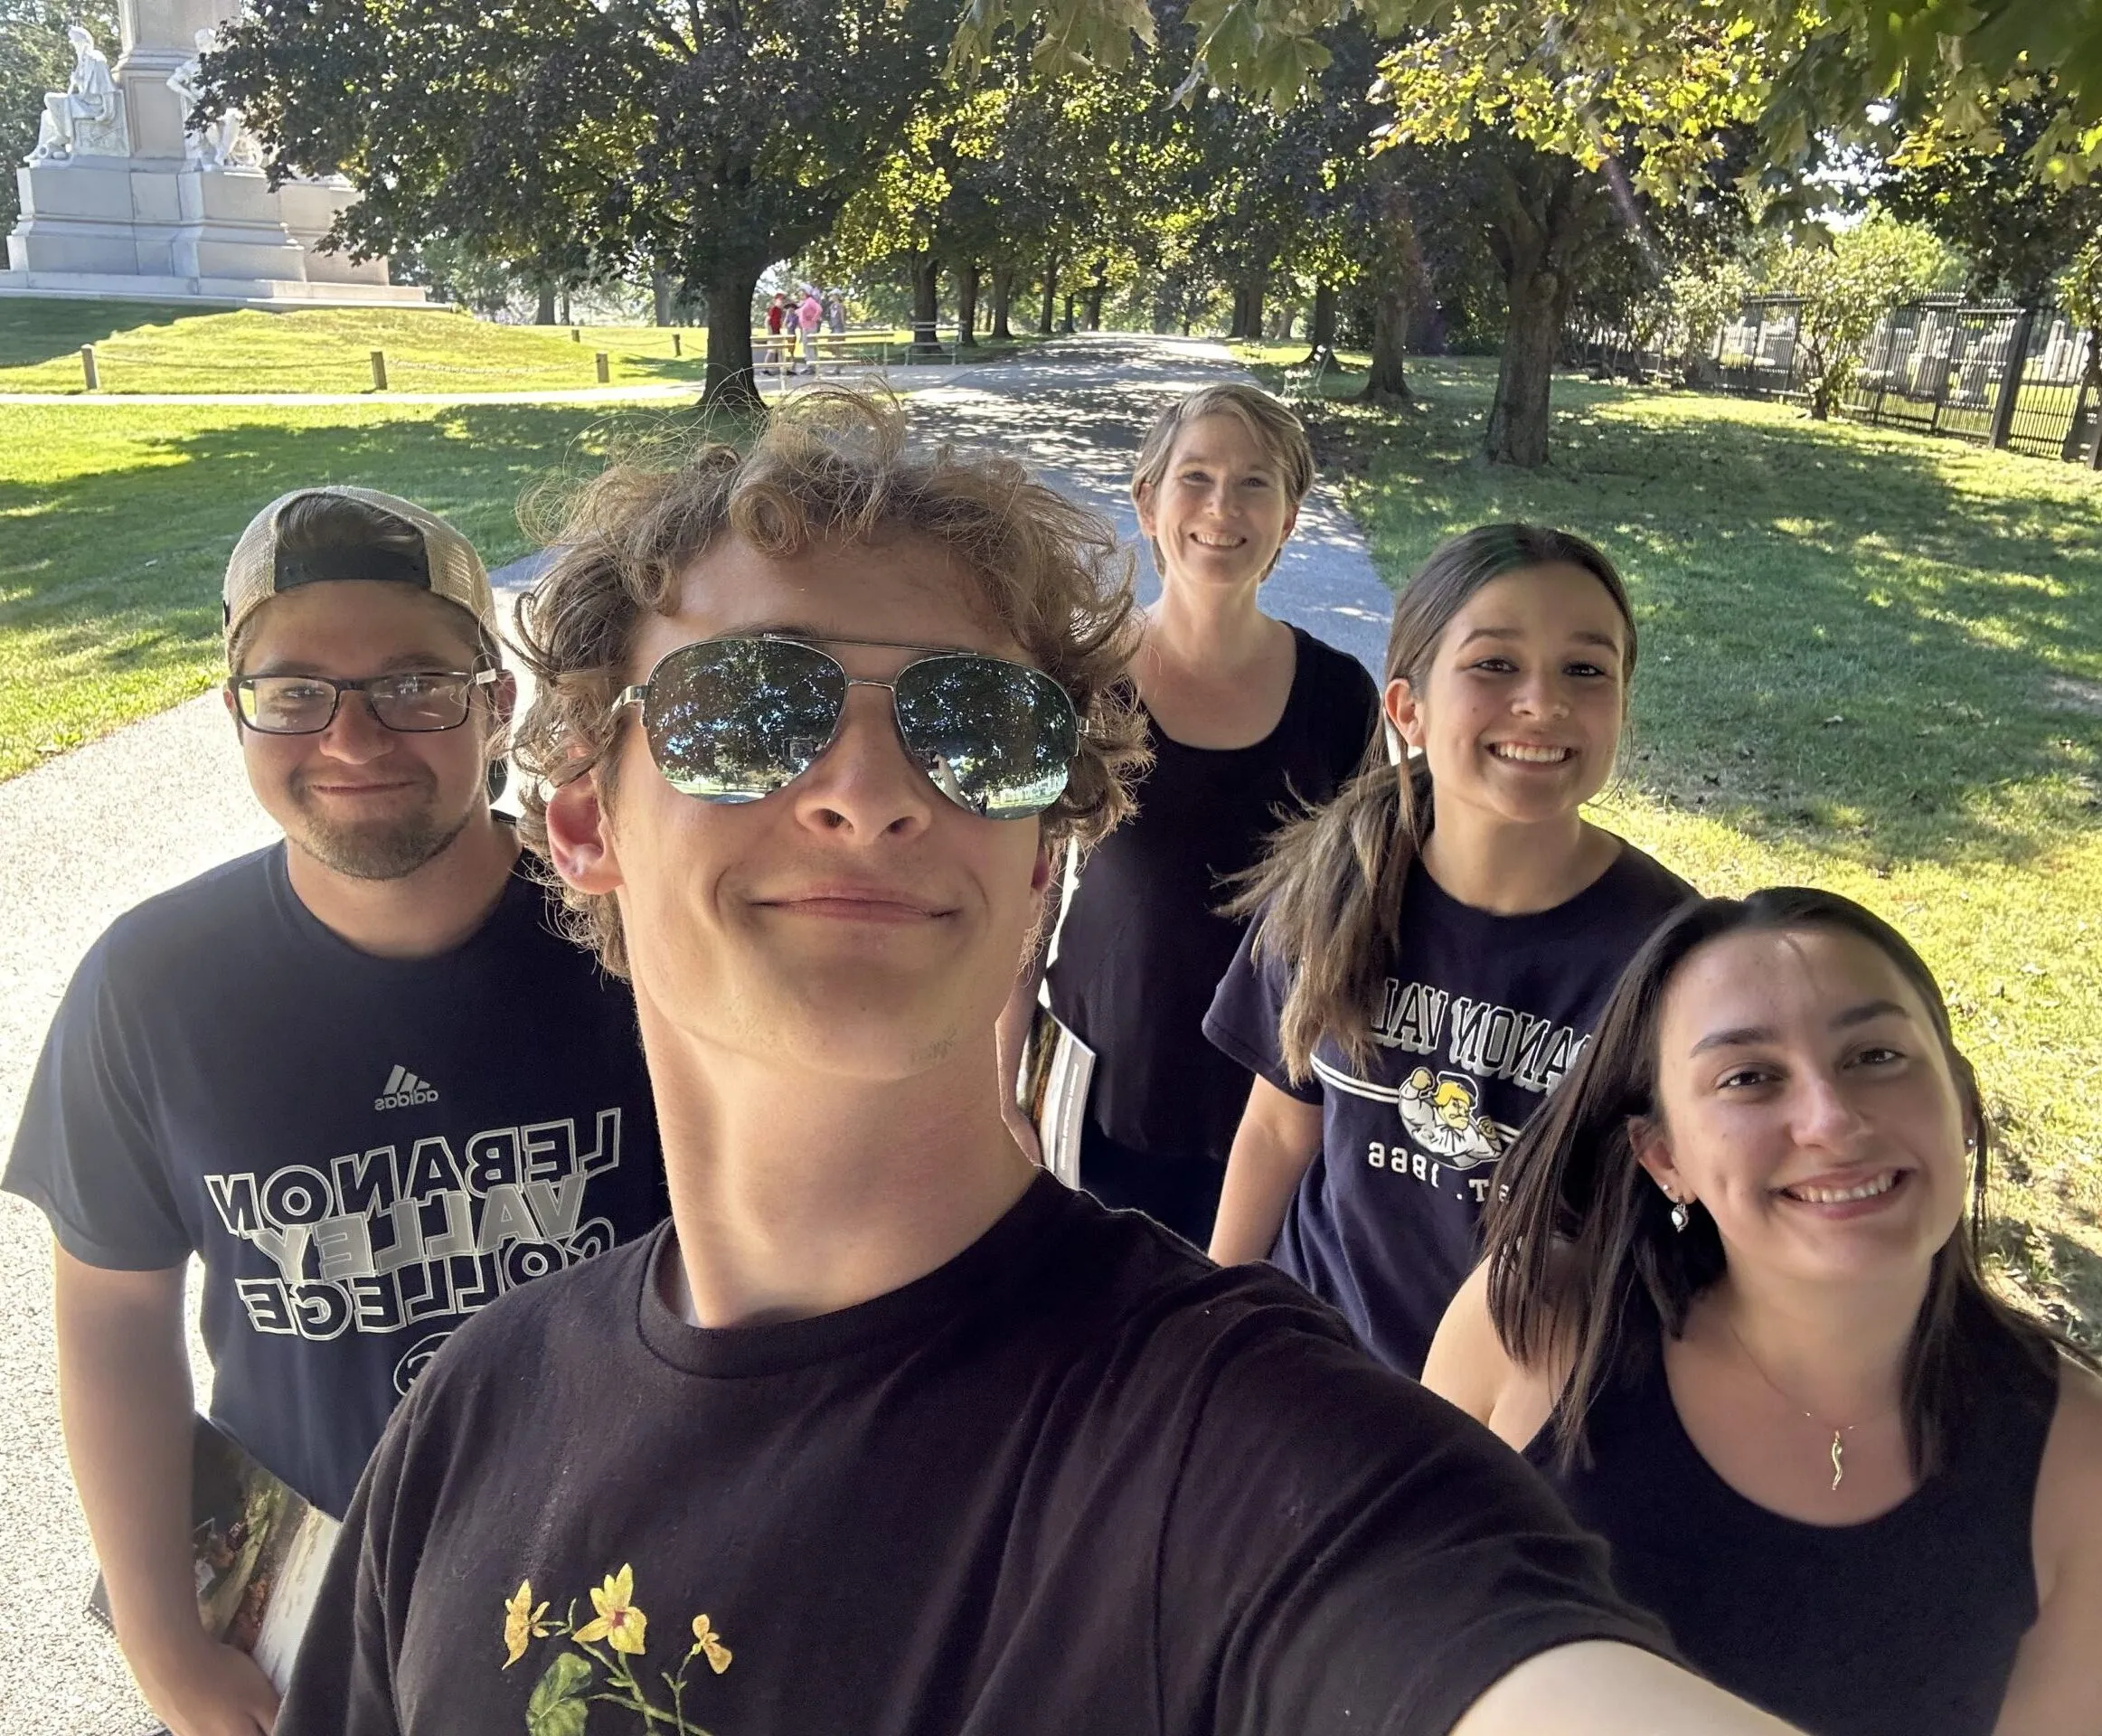 LVC Honors students pose for selfie during weekend trip to Gettysburg